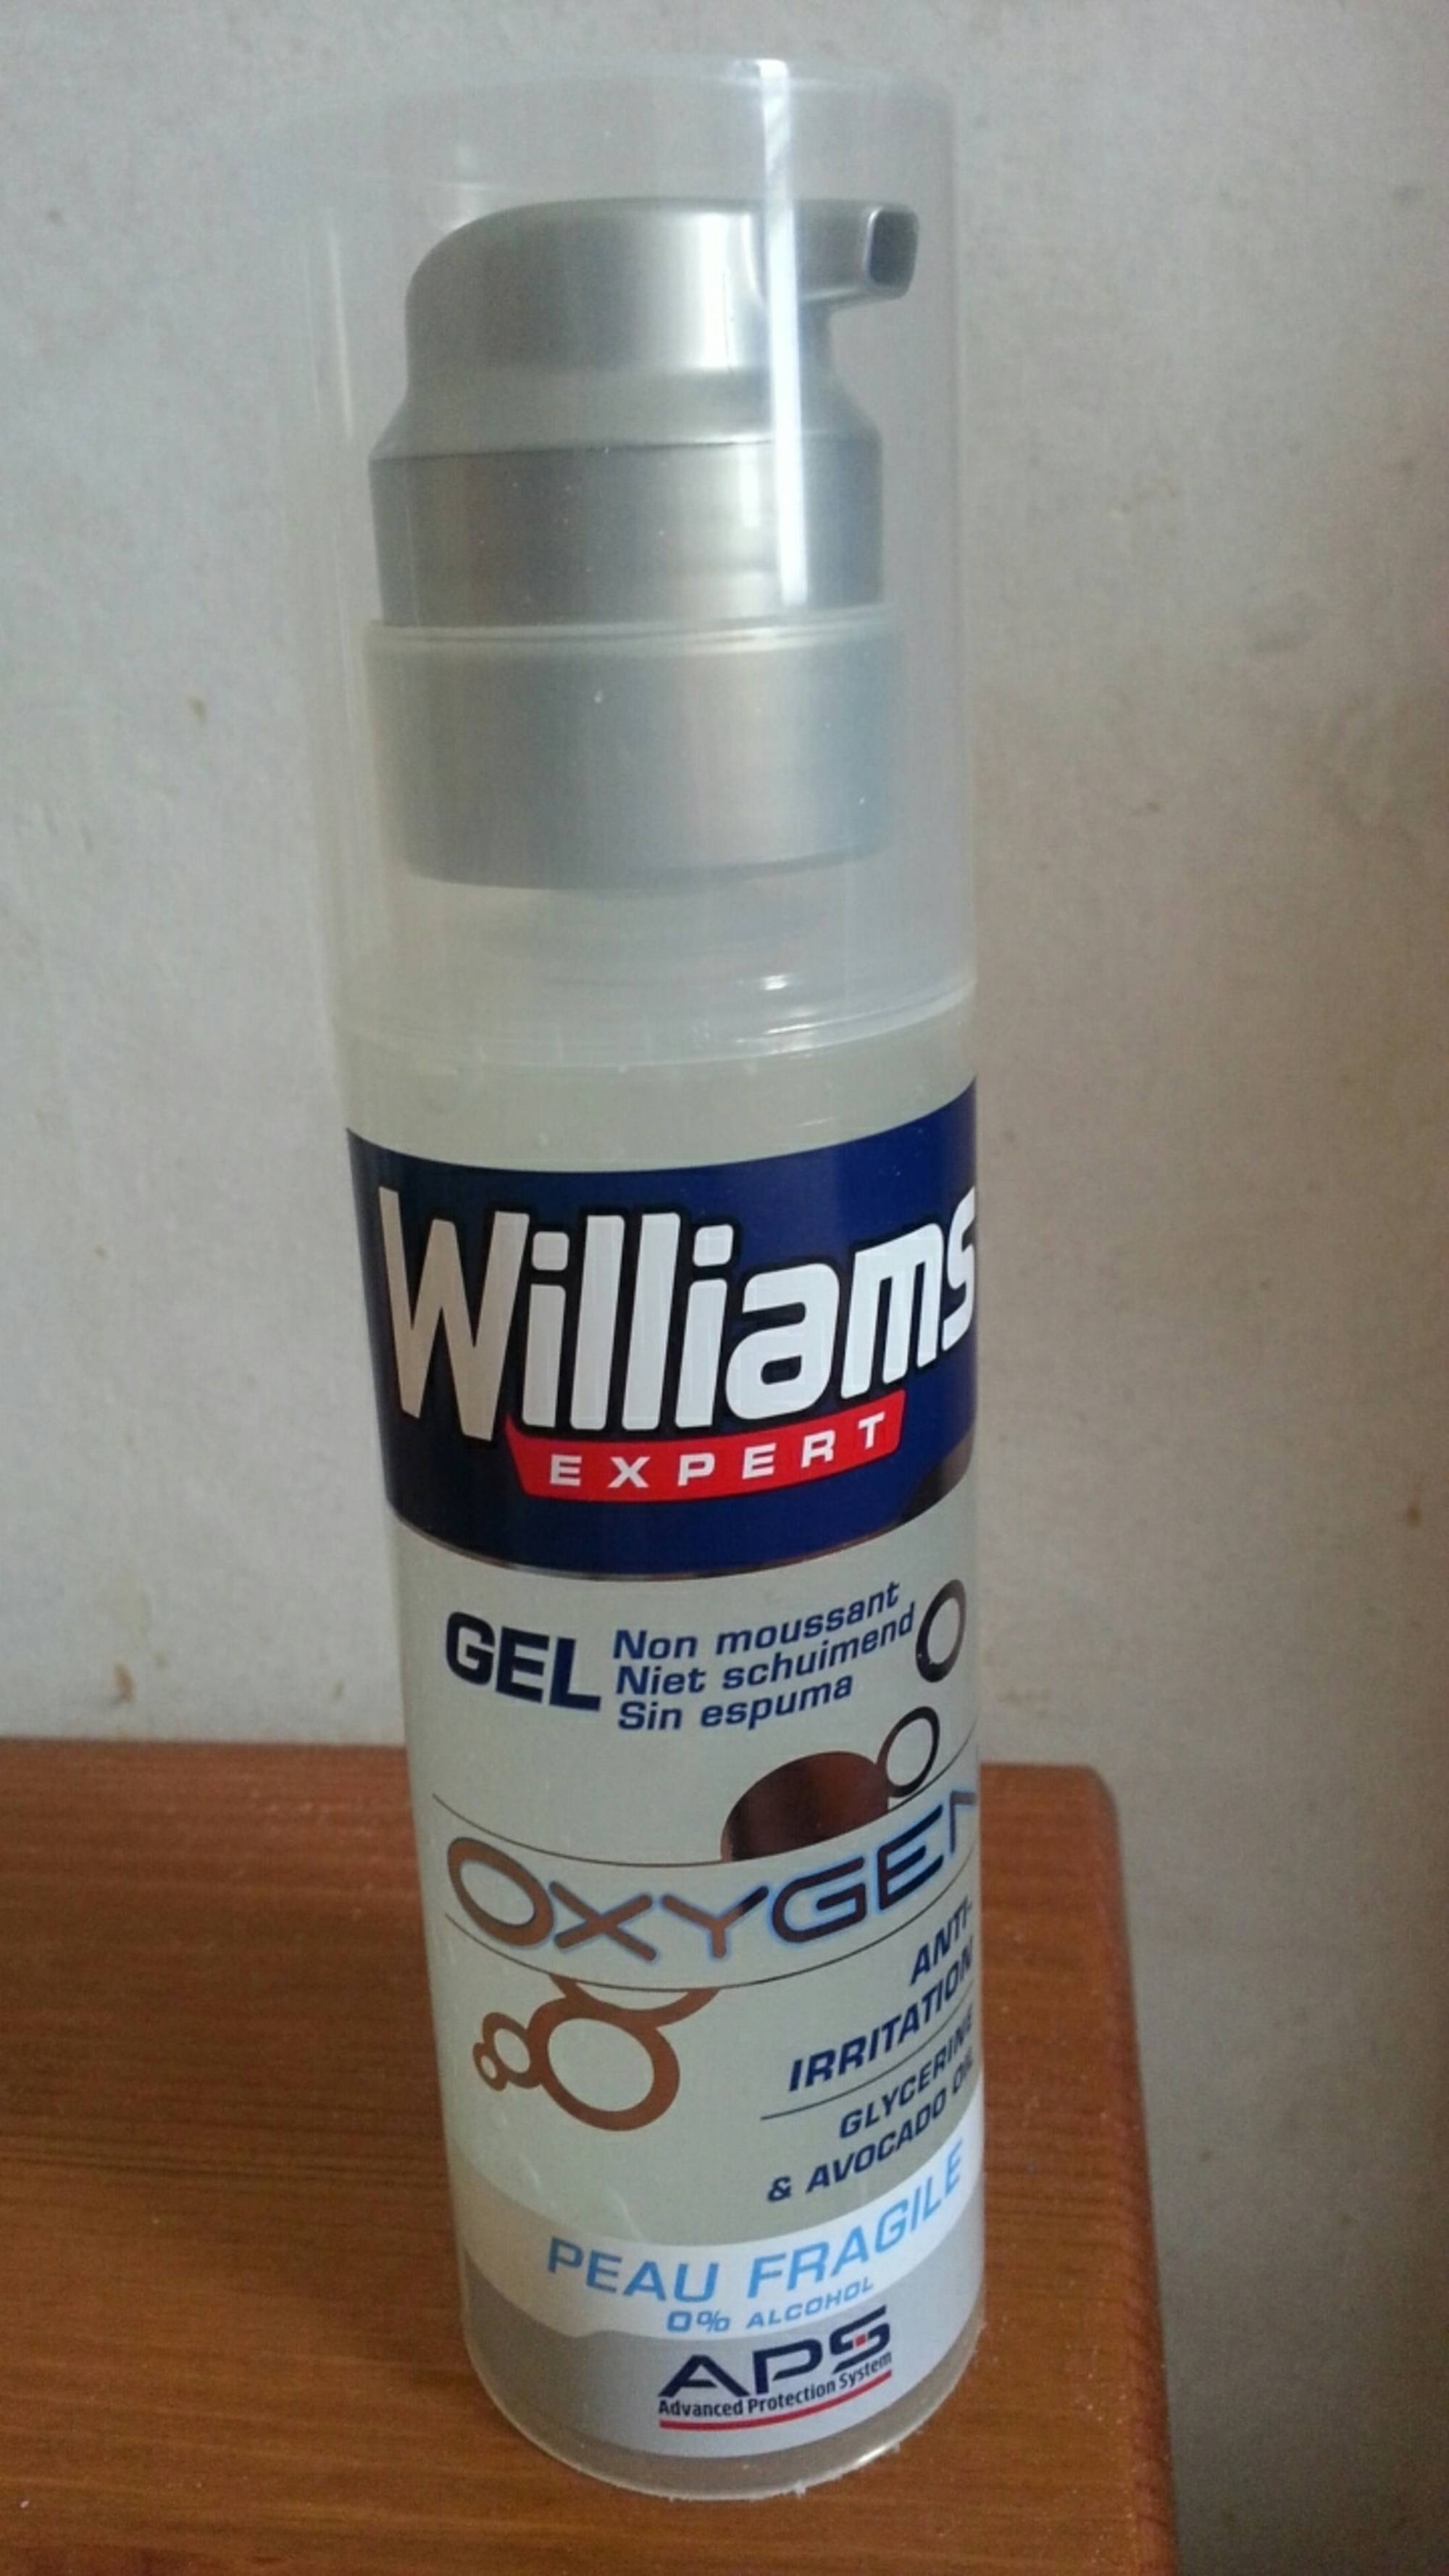 WILLIAMS EXPERT - Oxygen - Gel anti-irritation peau fragile